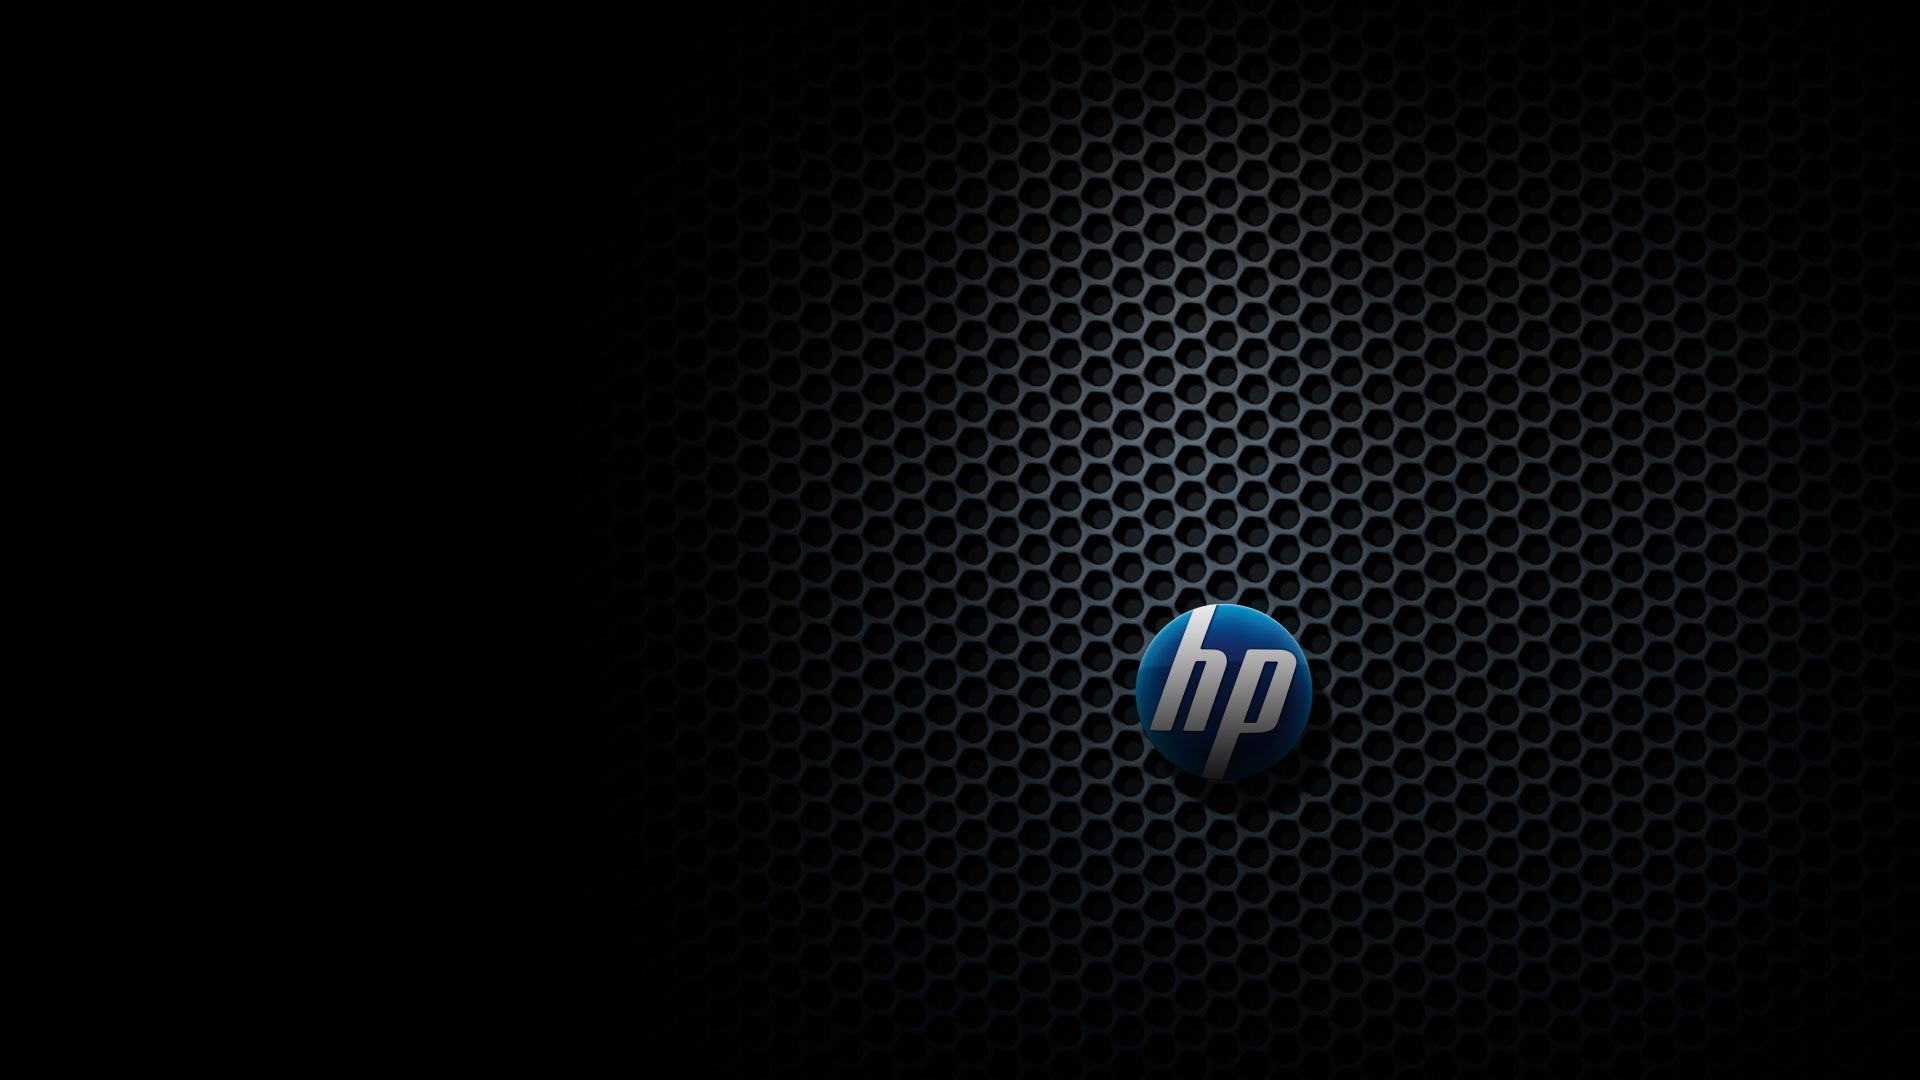 HP Desktop Windows 1.0 Wallpaper